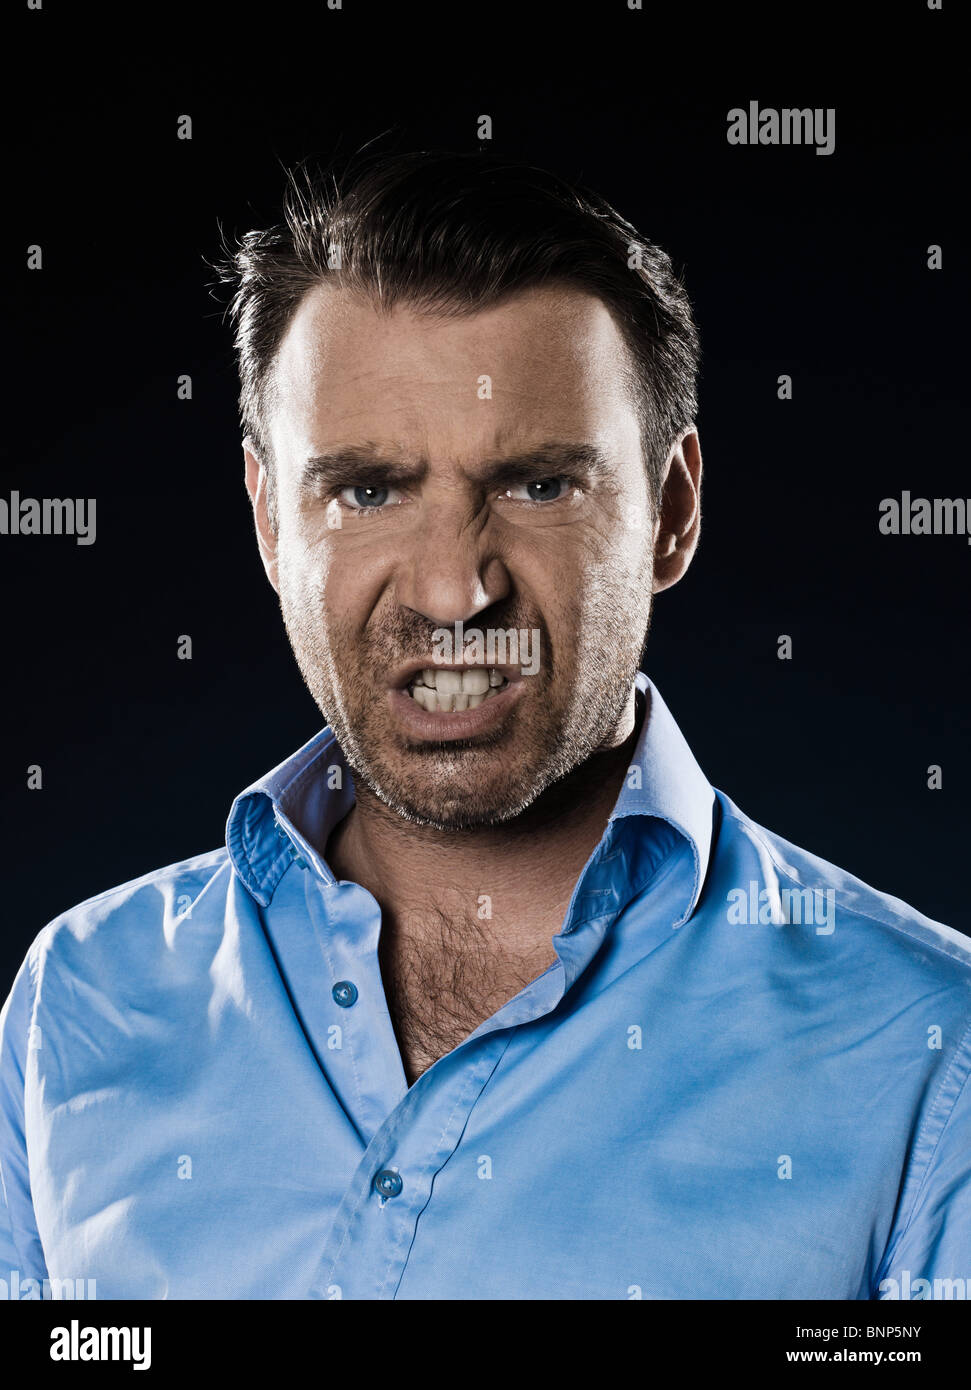 caucasian man unshaven pucker anger portrait isolated studio on black background Stock Photo